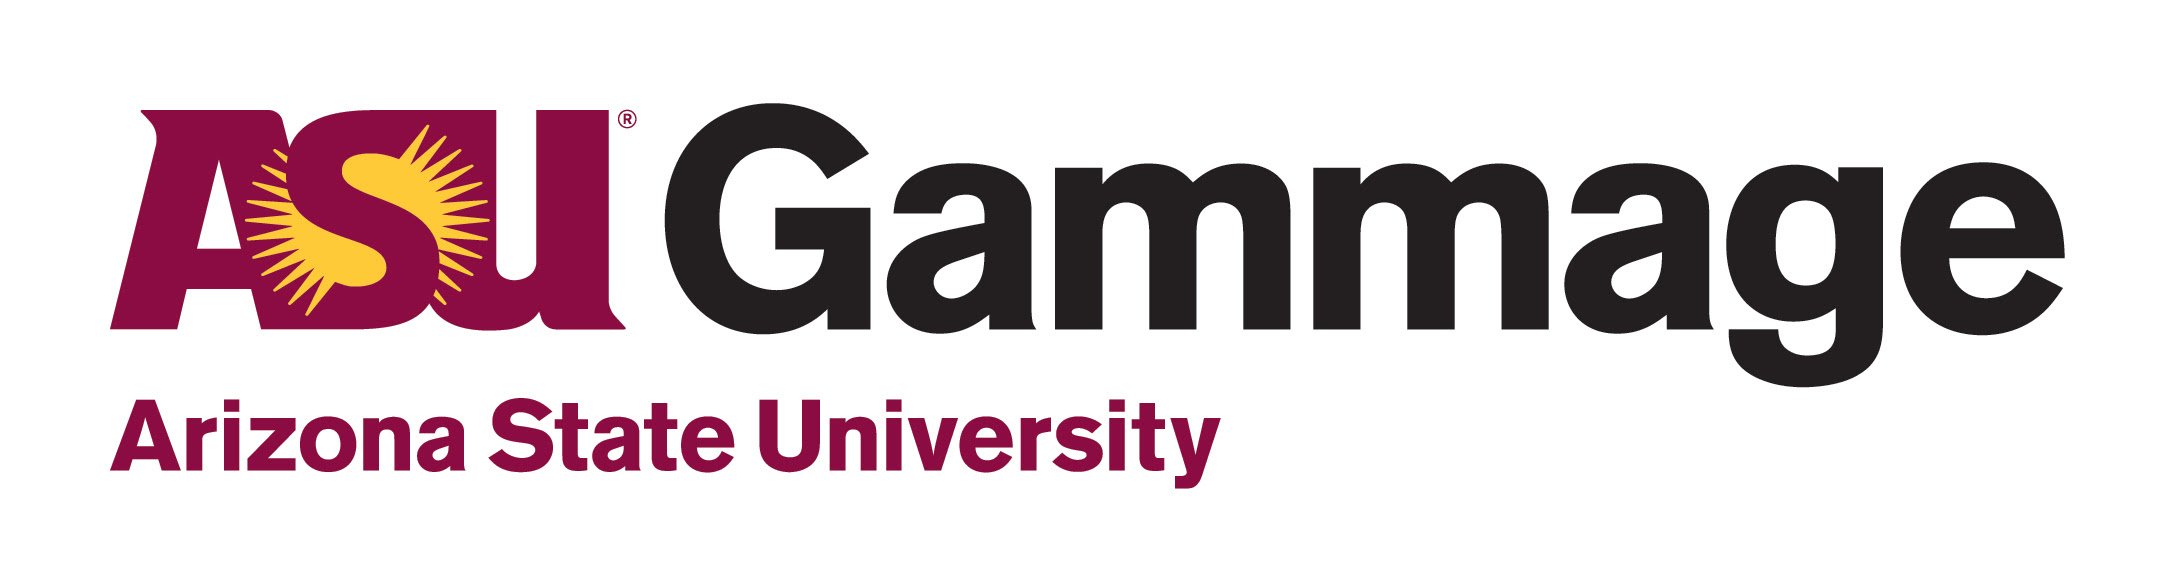 Gammage-logo-Ellie-Borst.png